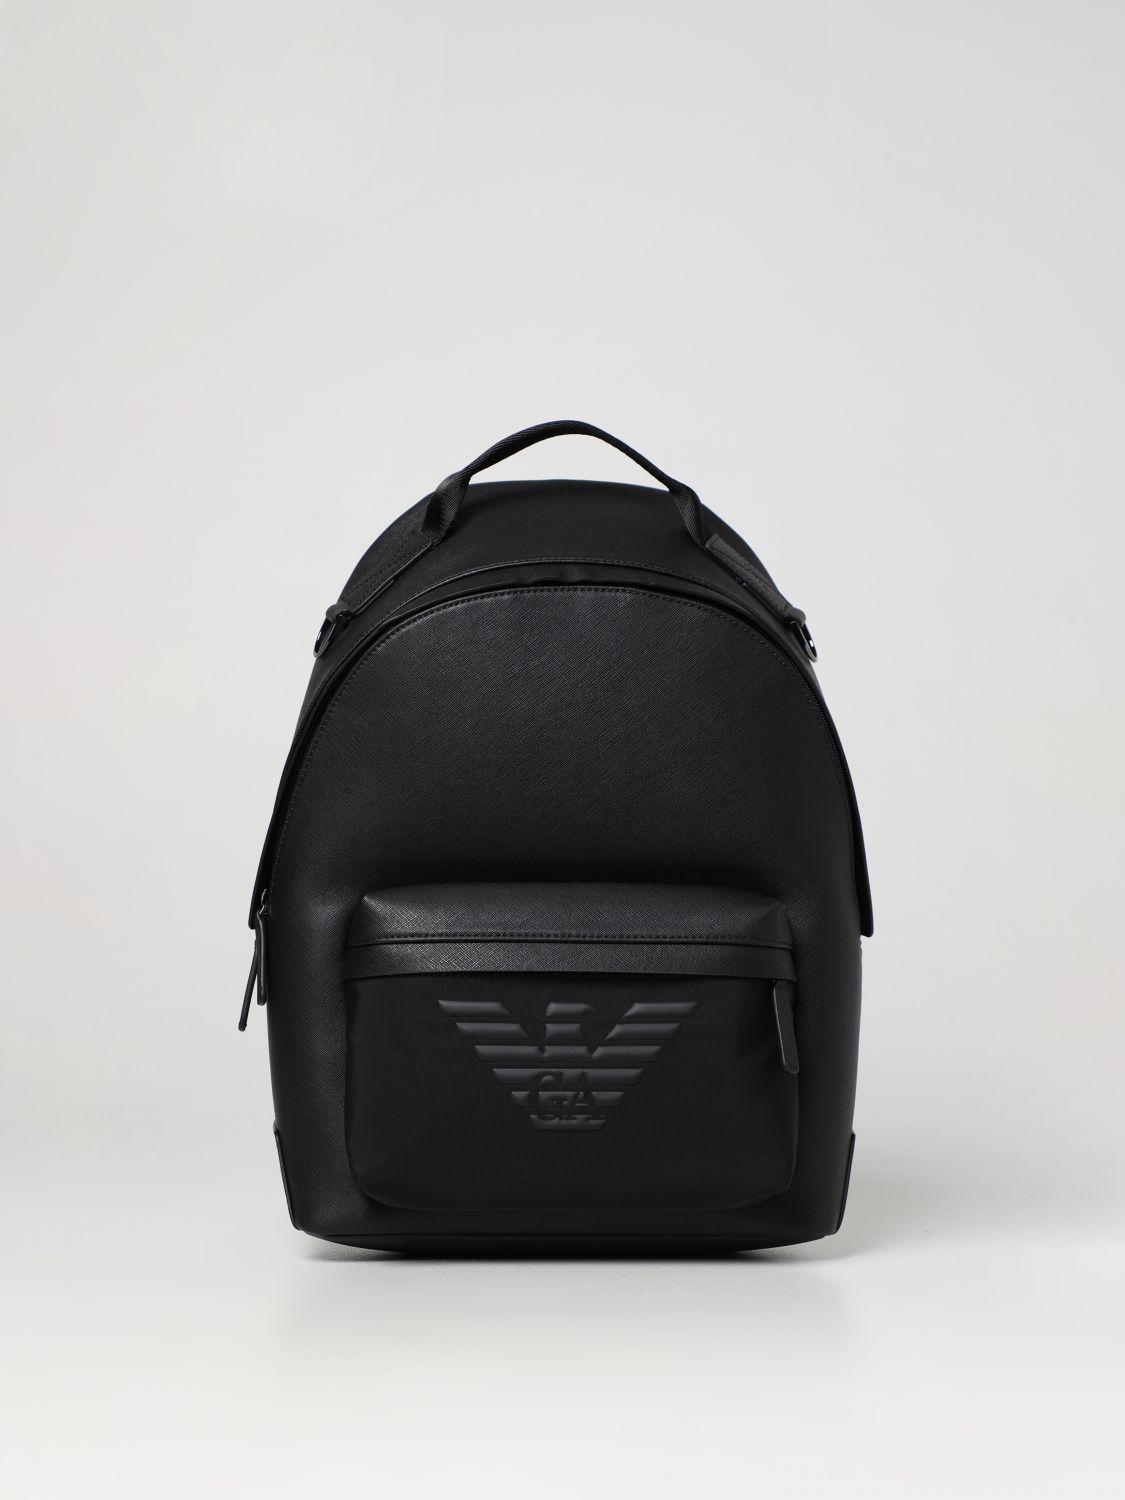 Emporio Armani Emporio Ari Backpack in Black for Men | Lyst